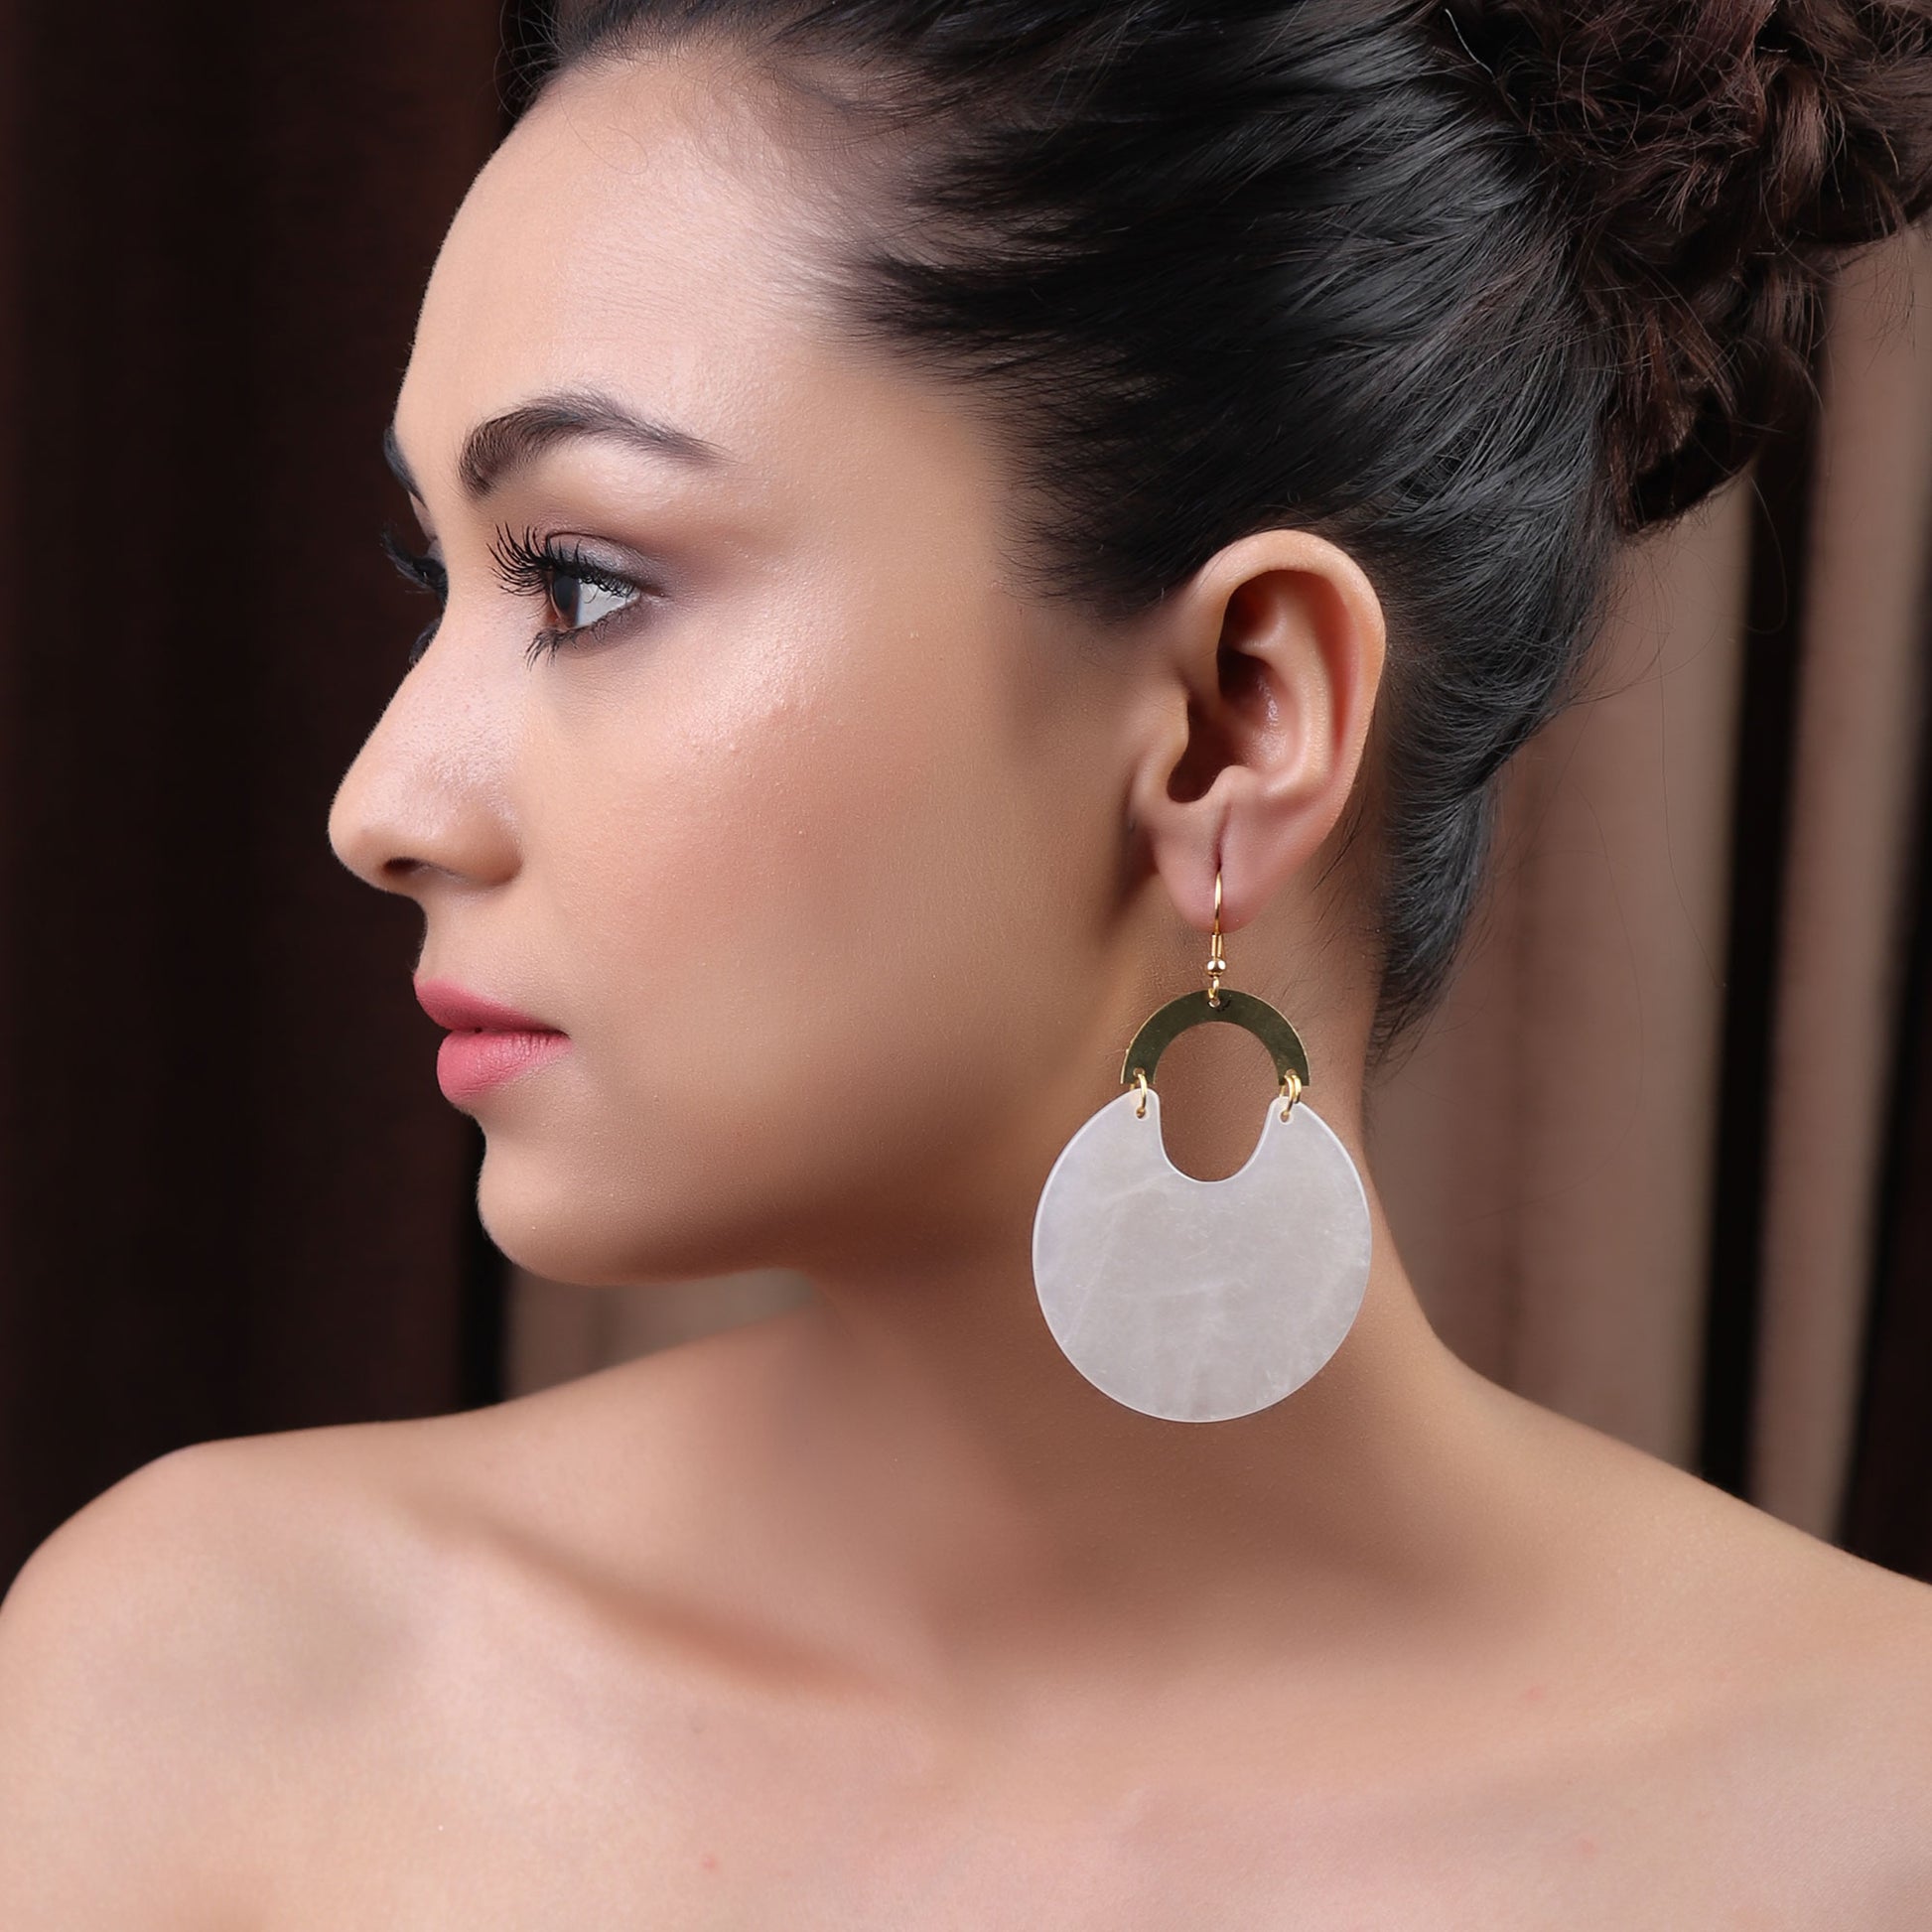 Earrings,The Moon Crescendo Earring in White - Cippele Multi Store